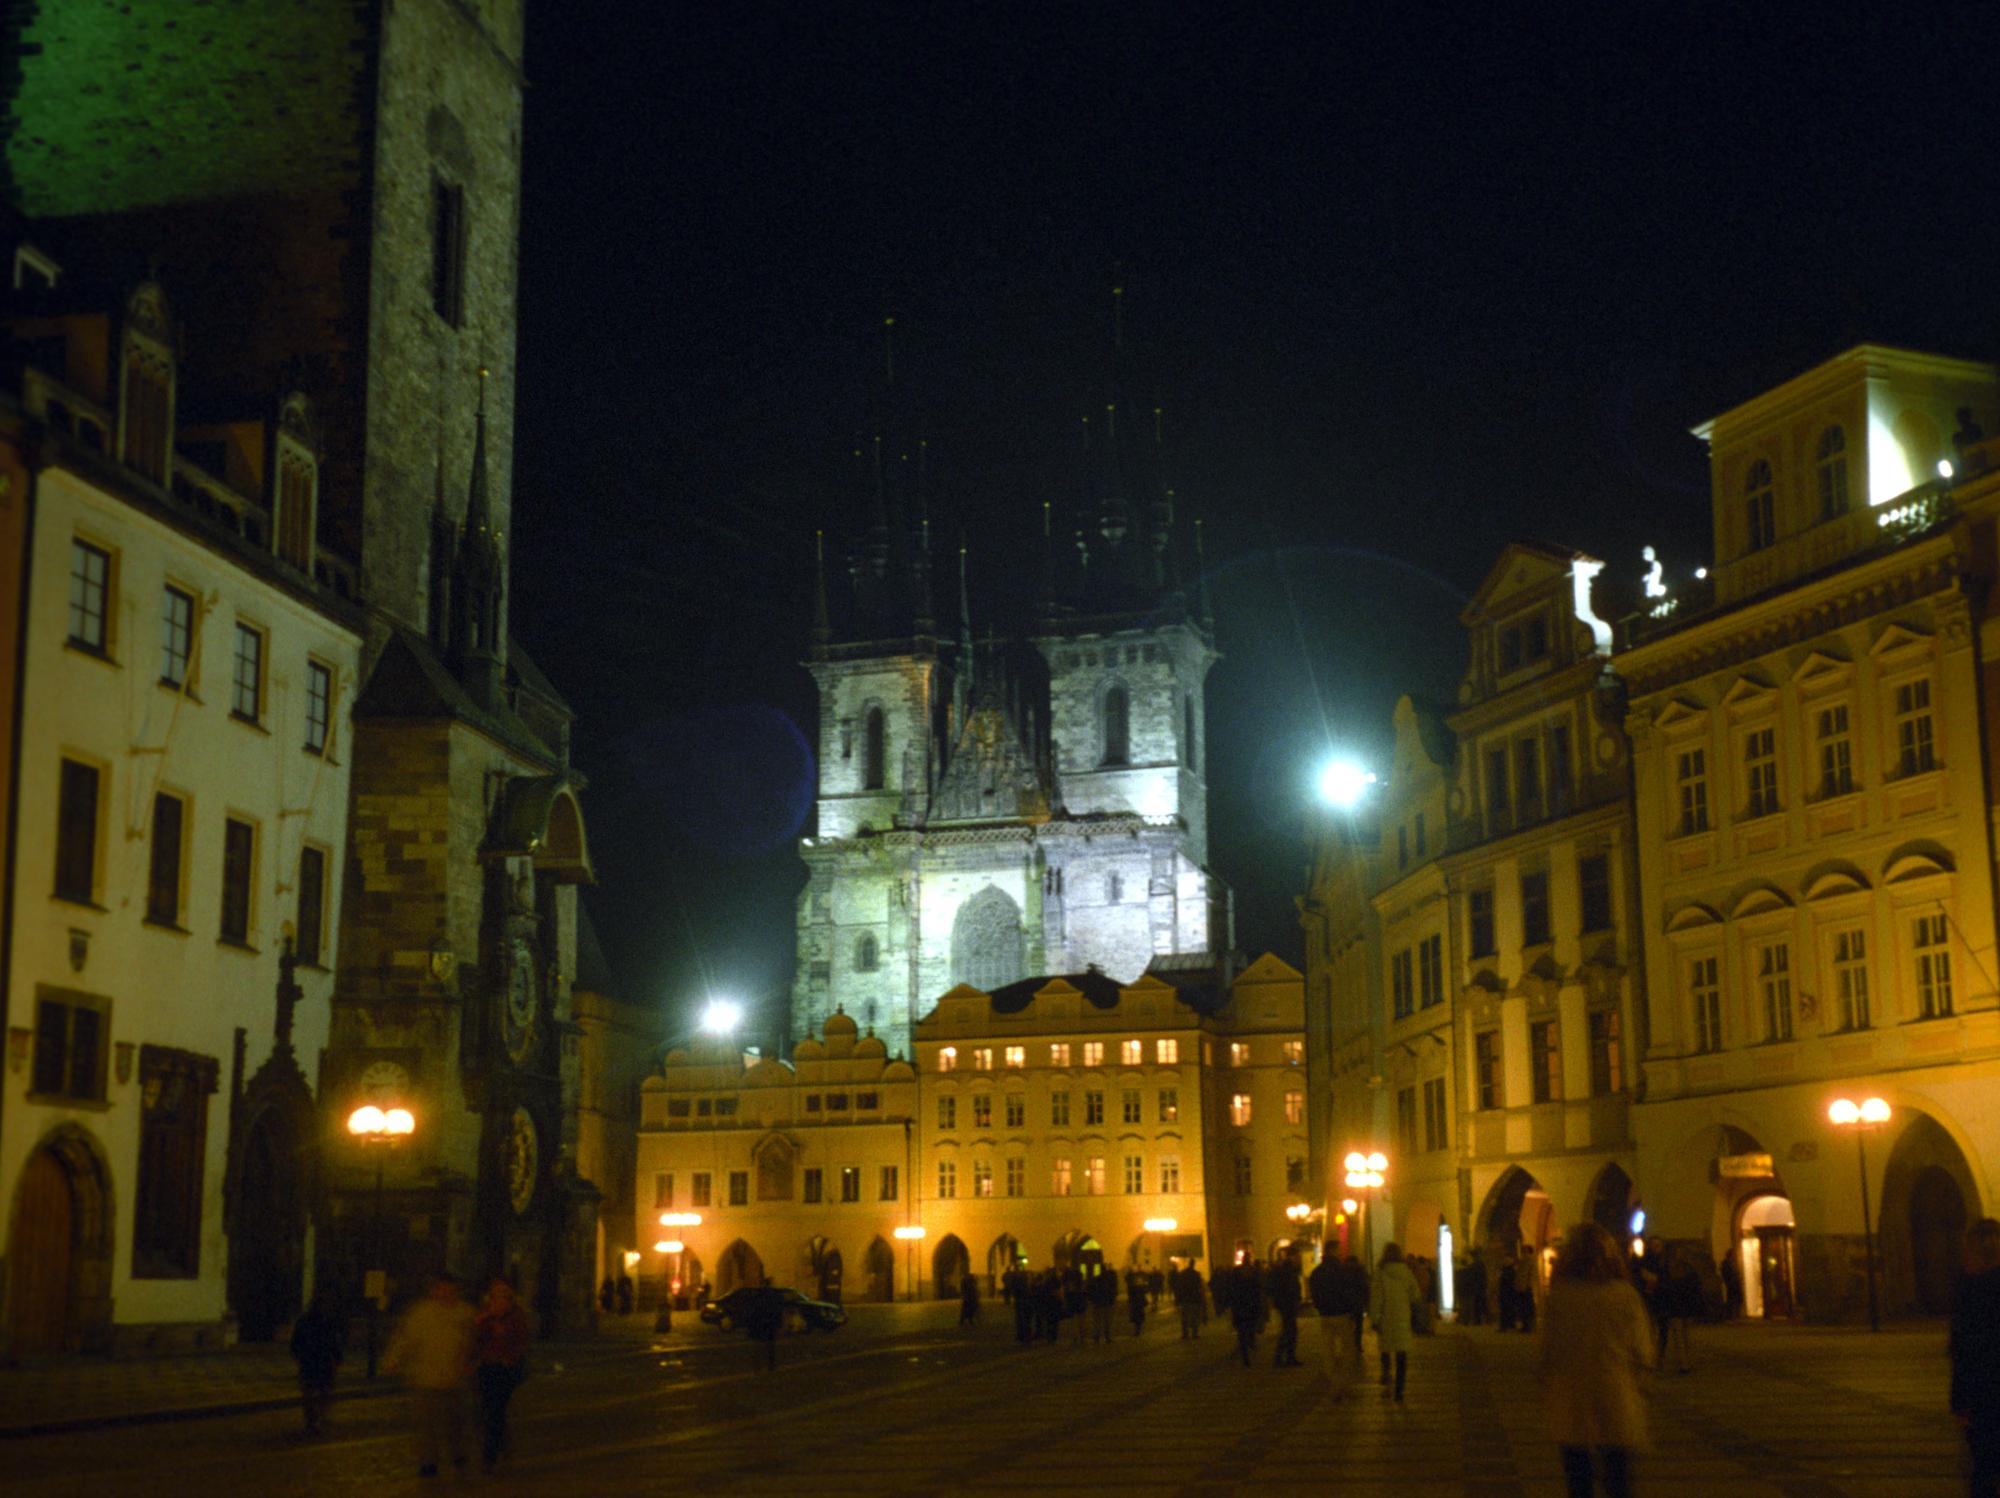 Czech Republic - Old Town Square